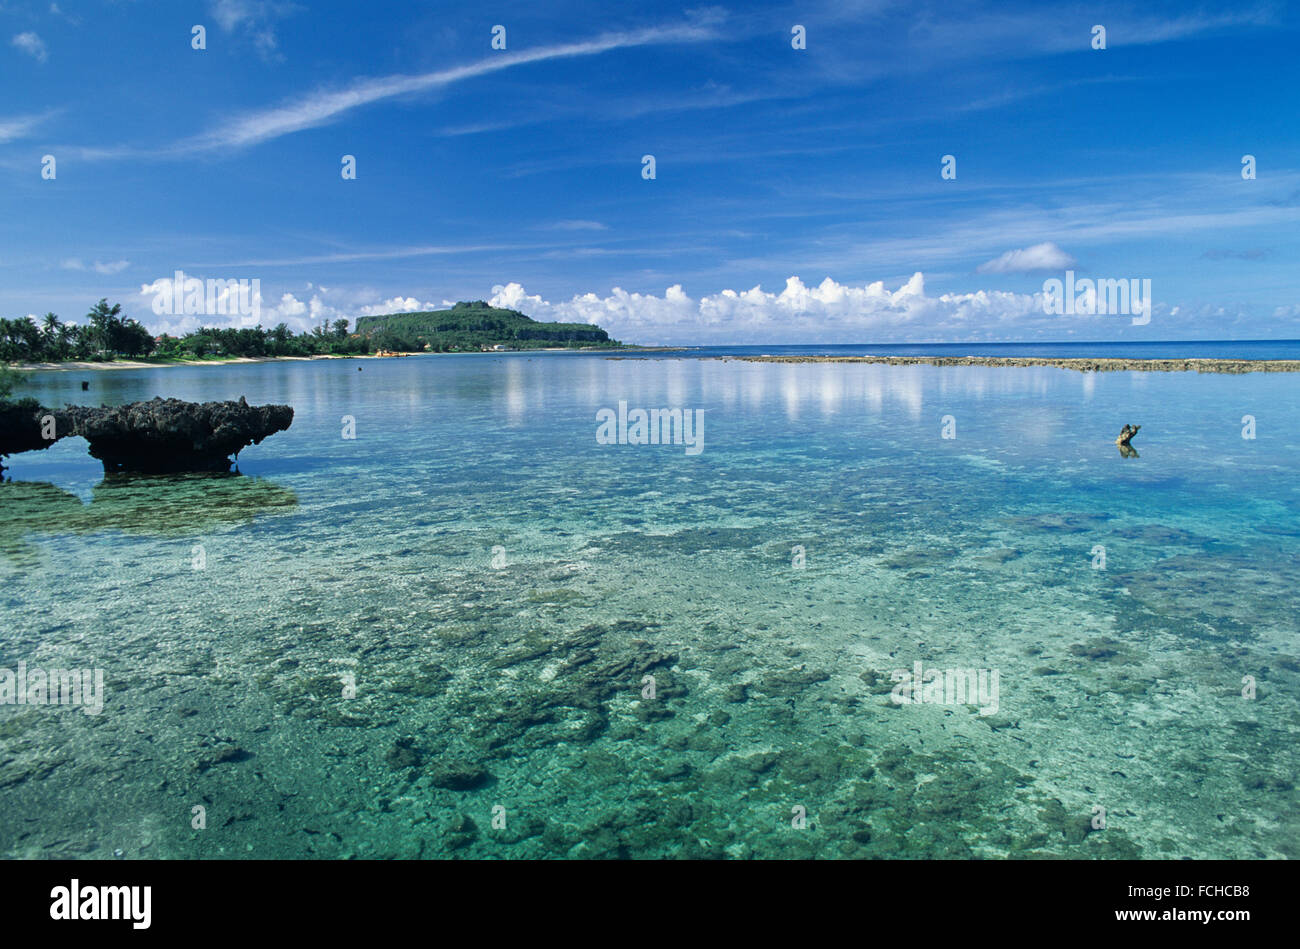 Ocean and island views of Palau Islands Stock Photo